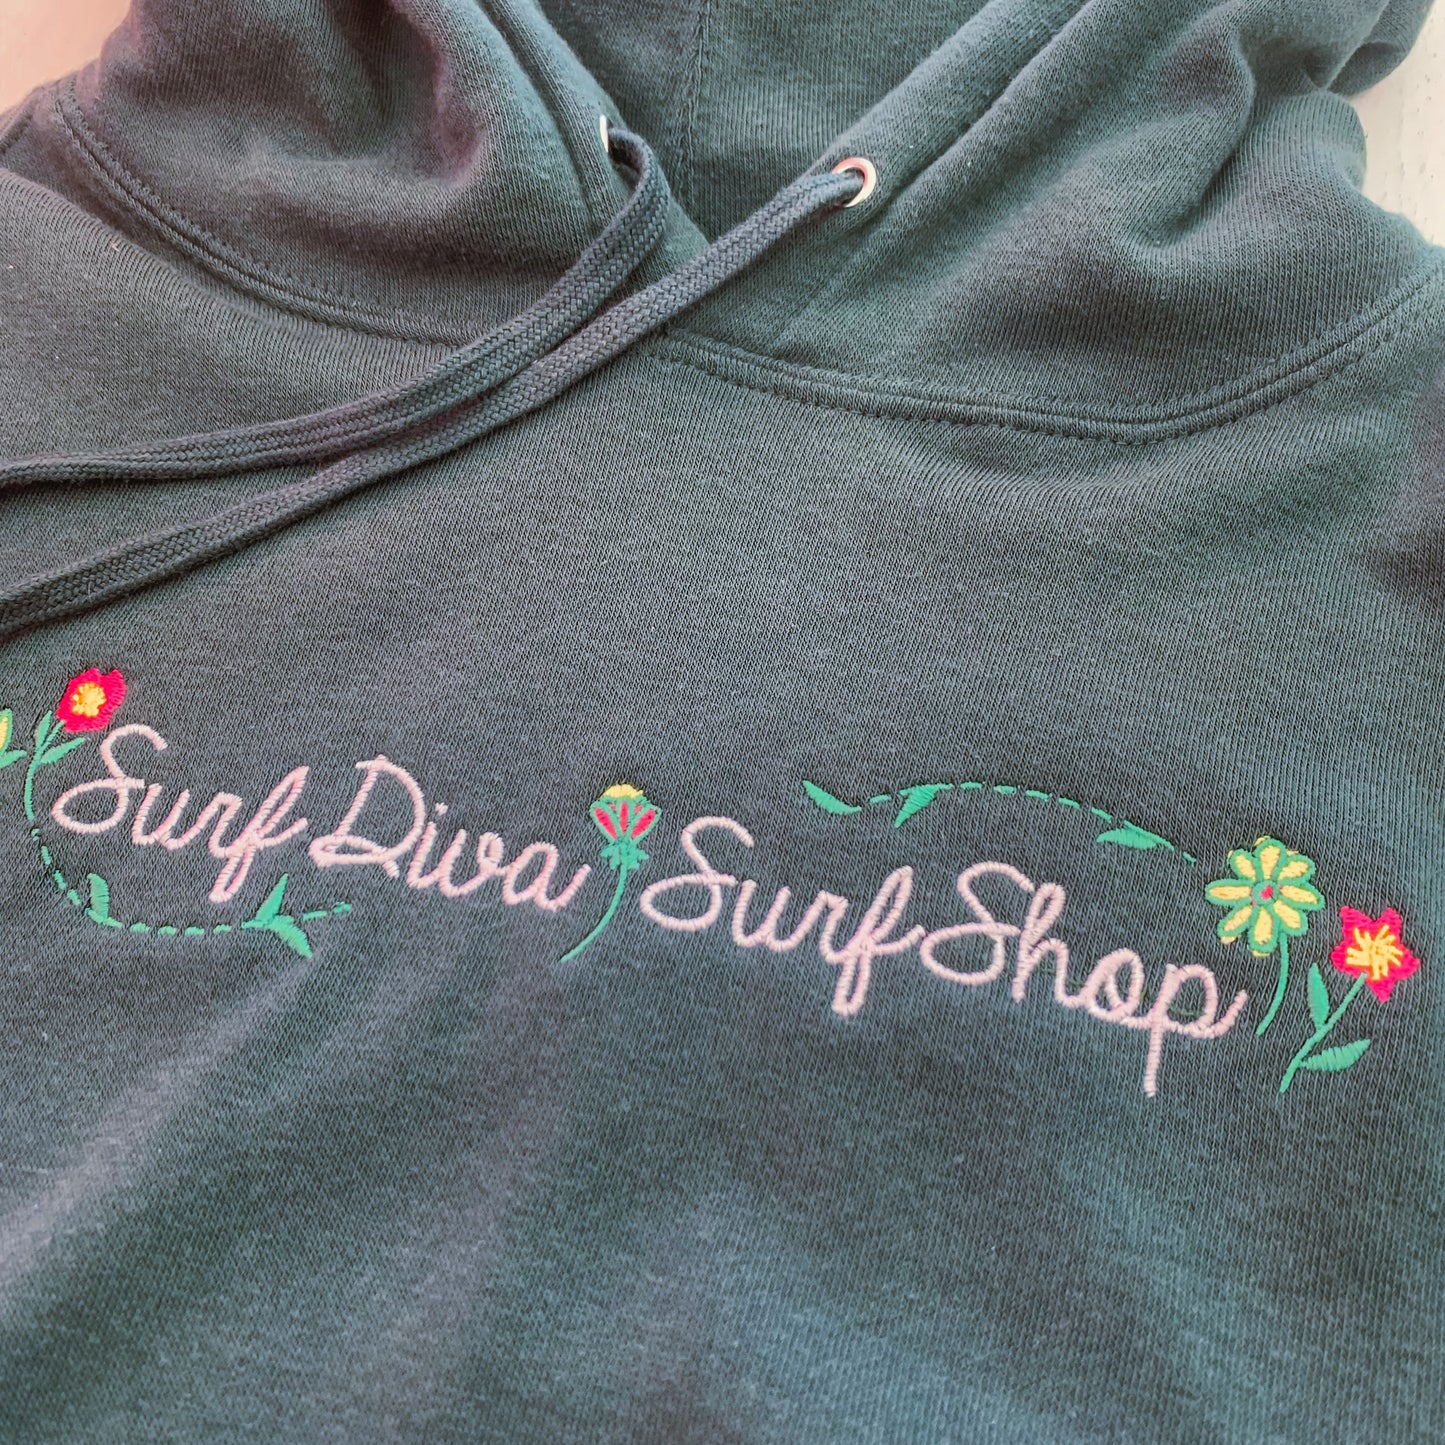 Surf Diva Surf Shop Flowerpoint Embroidery - HOODIE GREEN